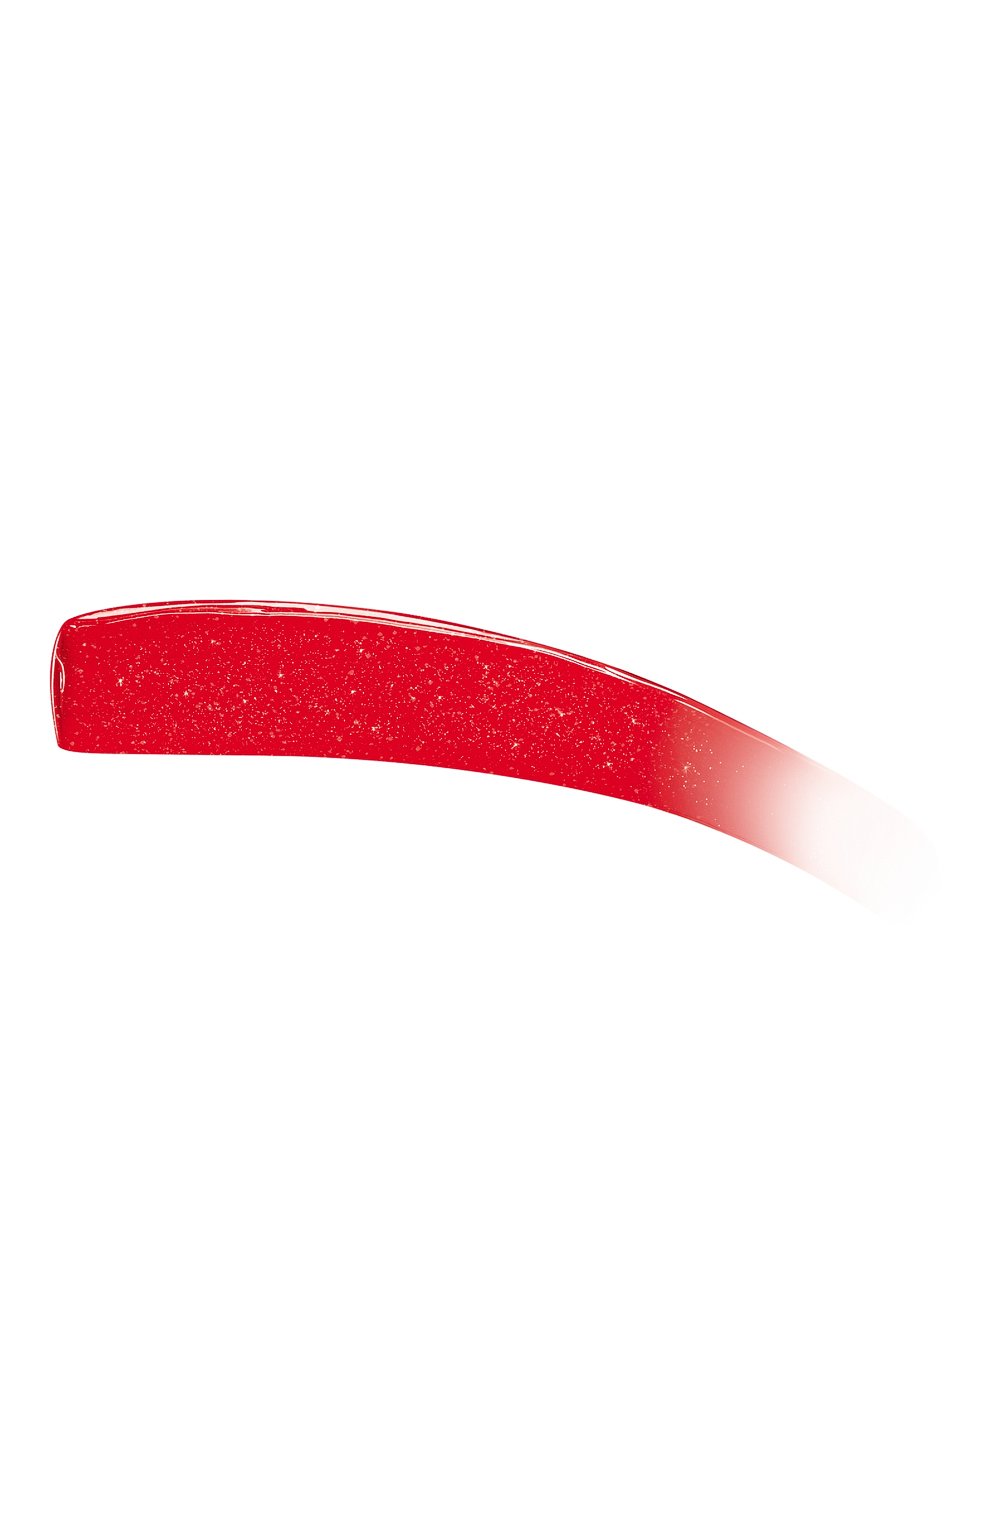 Губная помада rouge volupte rock'n shine, 7 YSL  цвета, арт. 3614272808270 | Фото 2 (Финишное покрытие: Сатиновый)